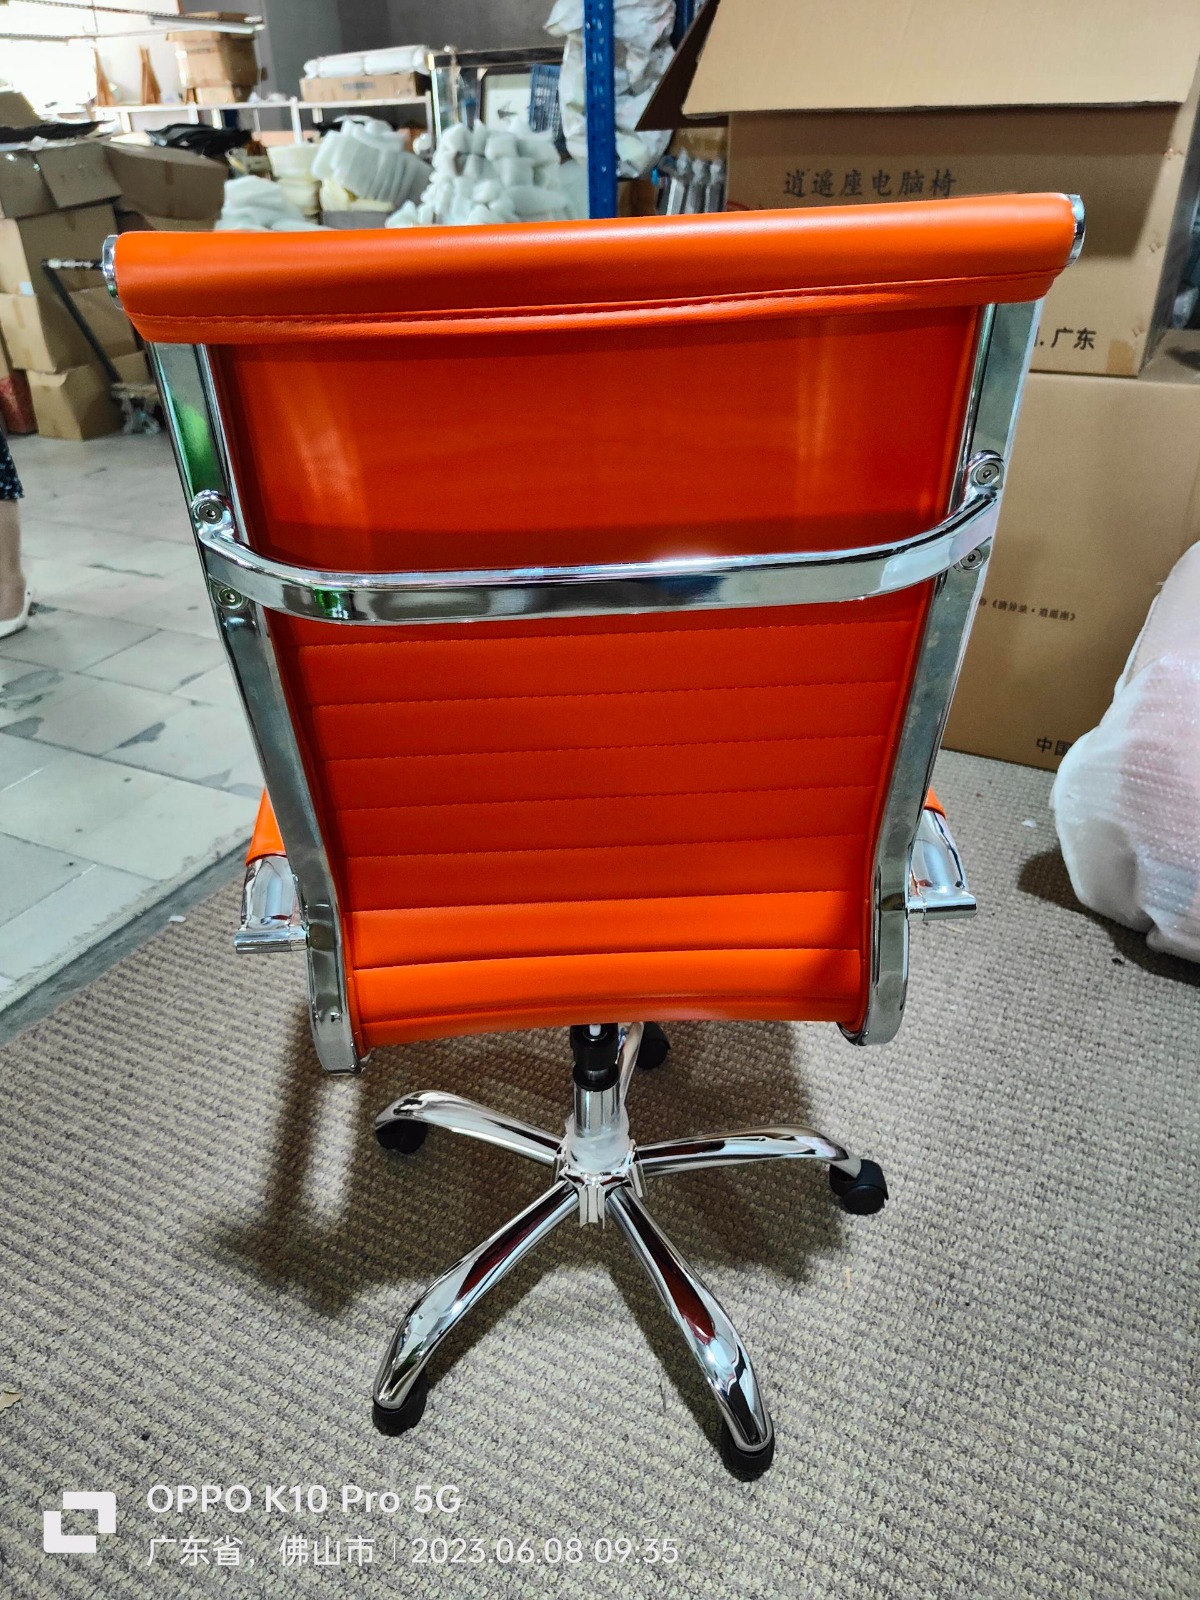 Designer Epsom luxury high back ribbed office chair Orange faux leather 